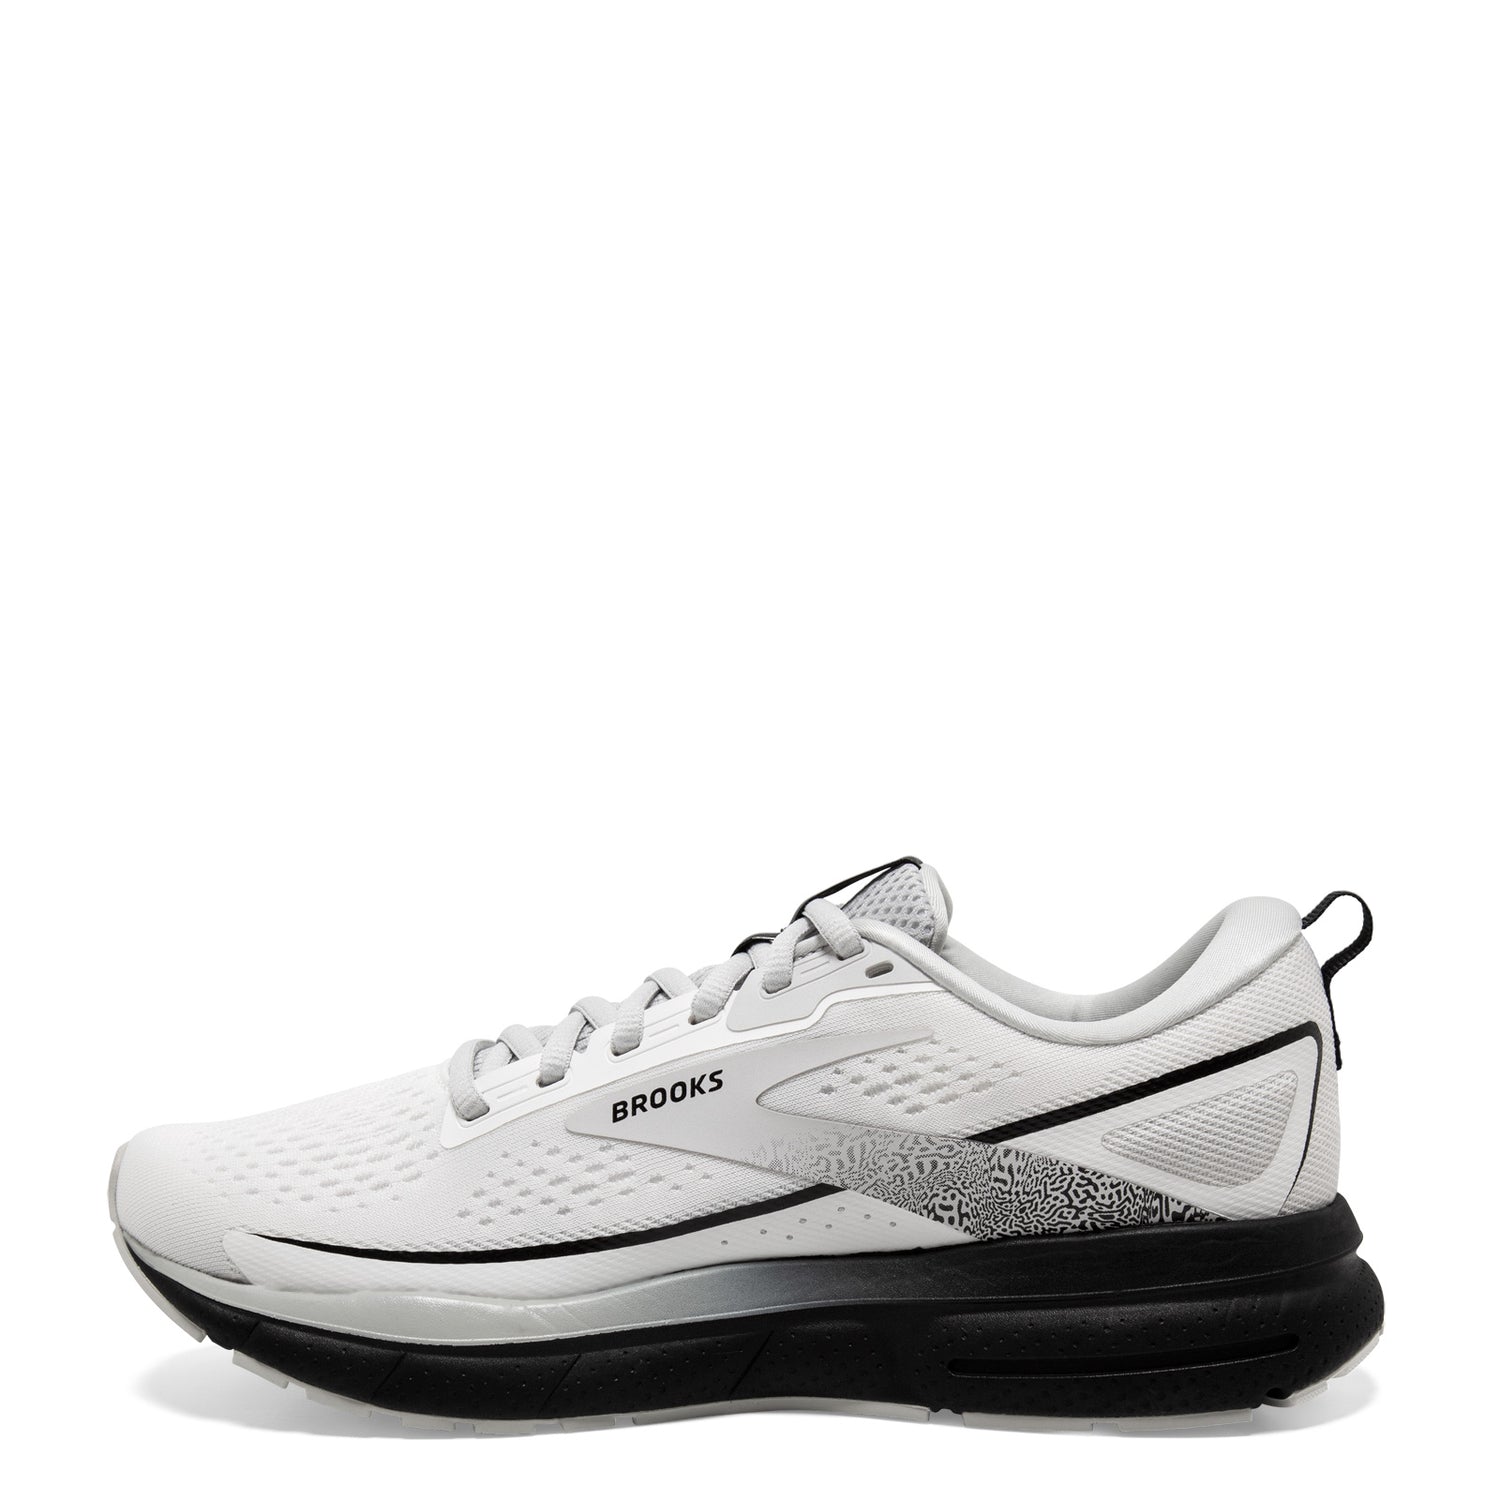 Peltz Shoes  Women's Brooks Trace 3 Running Shoe White/Oyster/Black 120401 1B 191